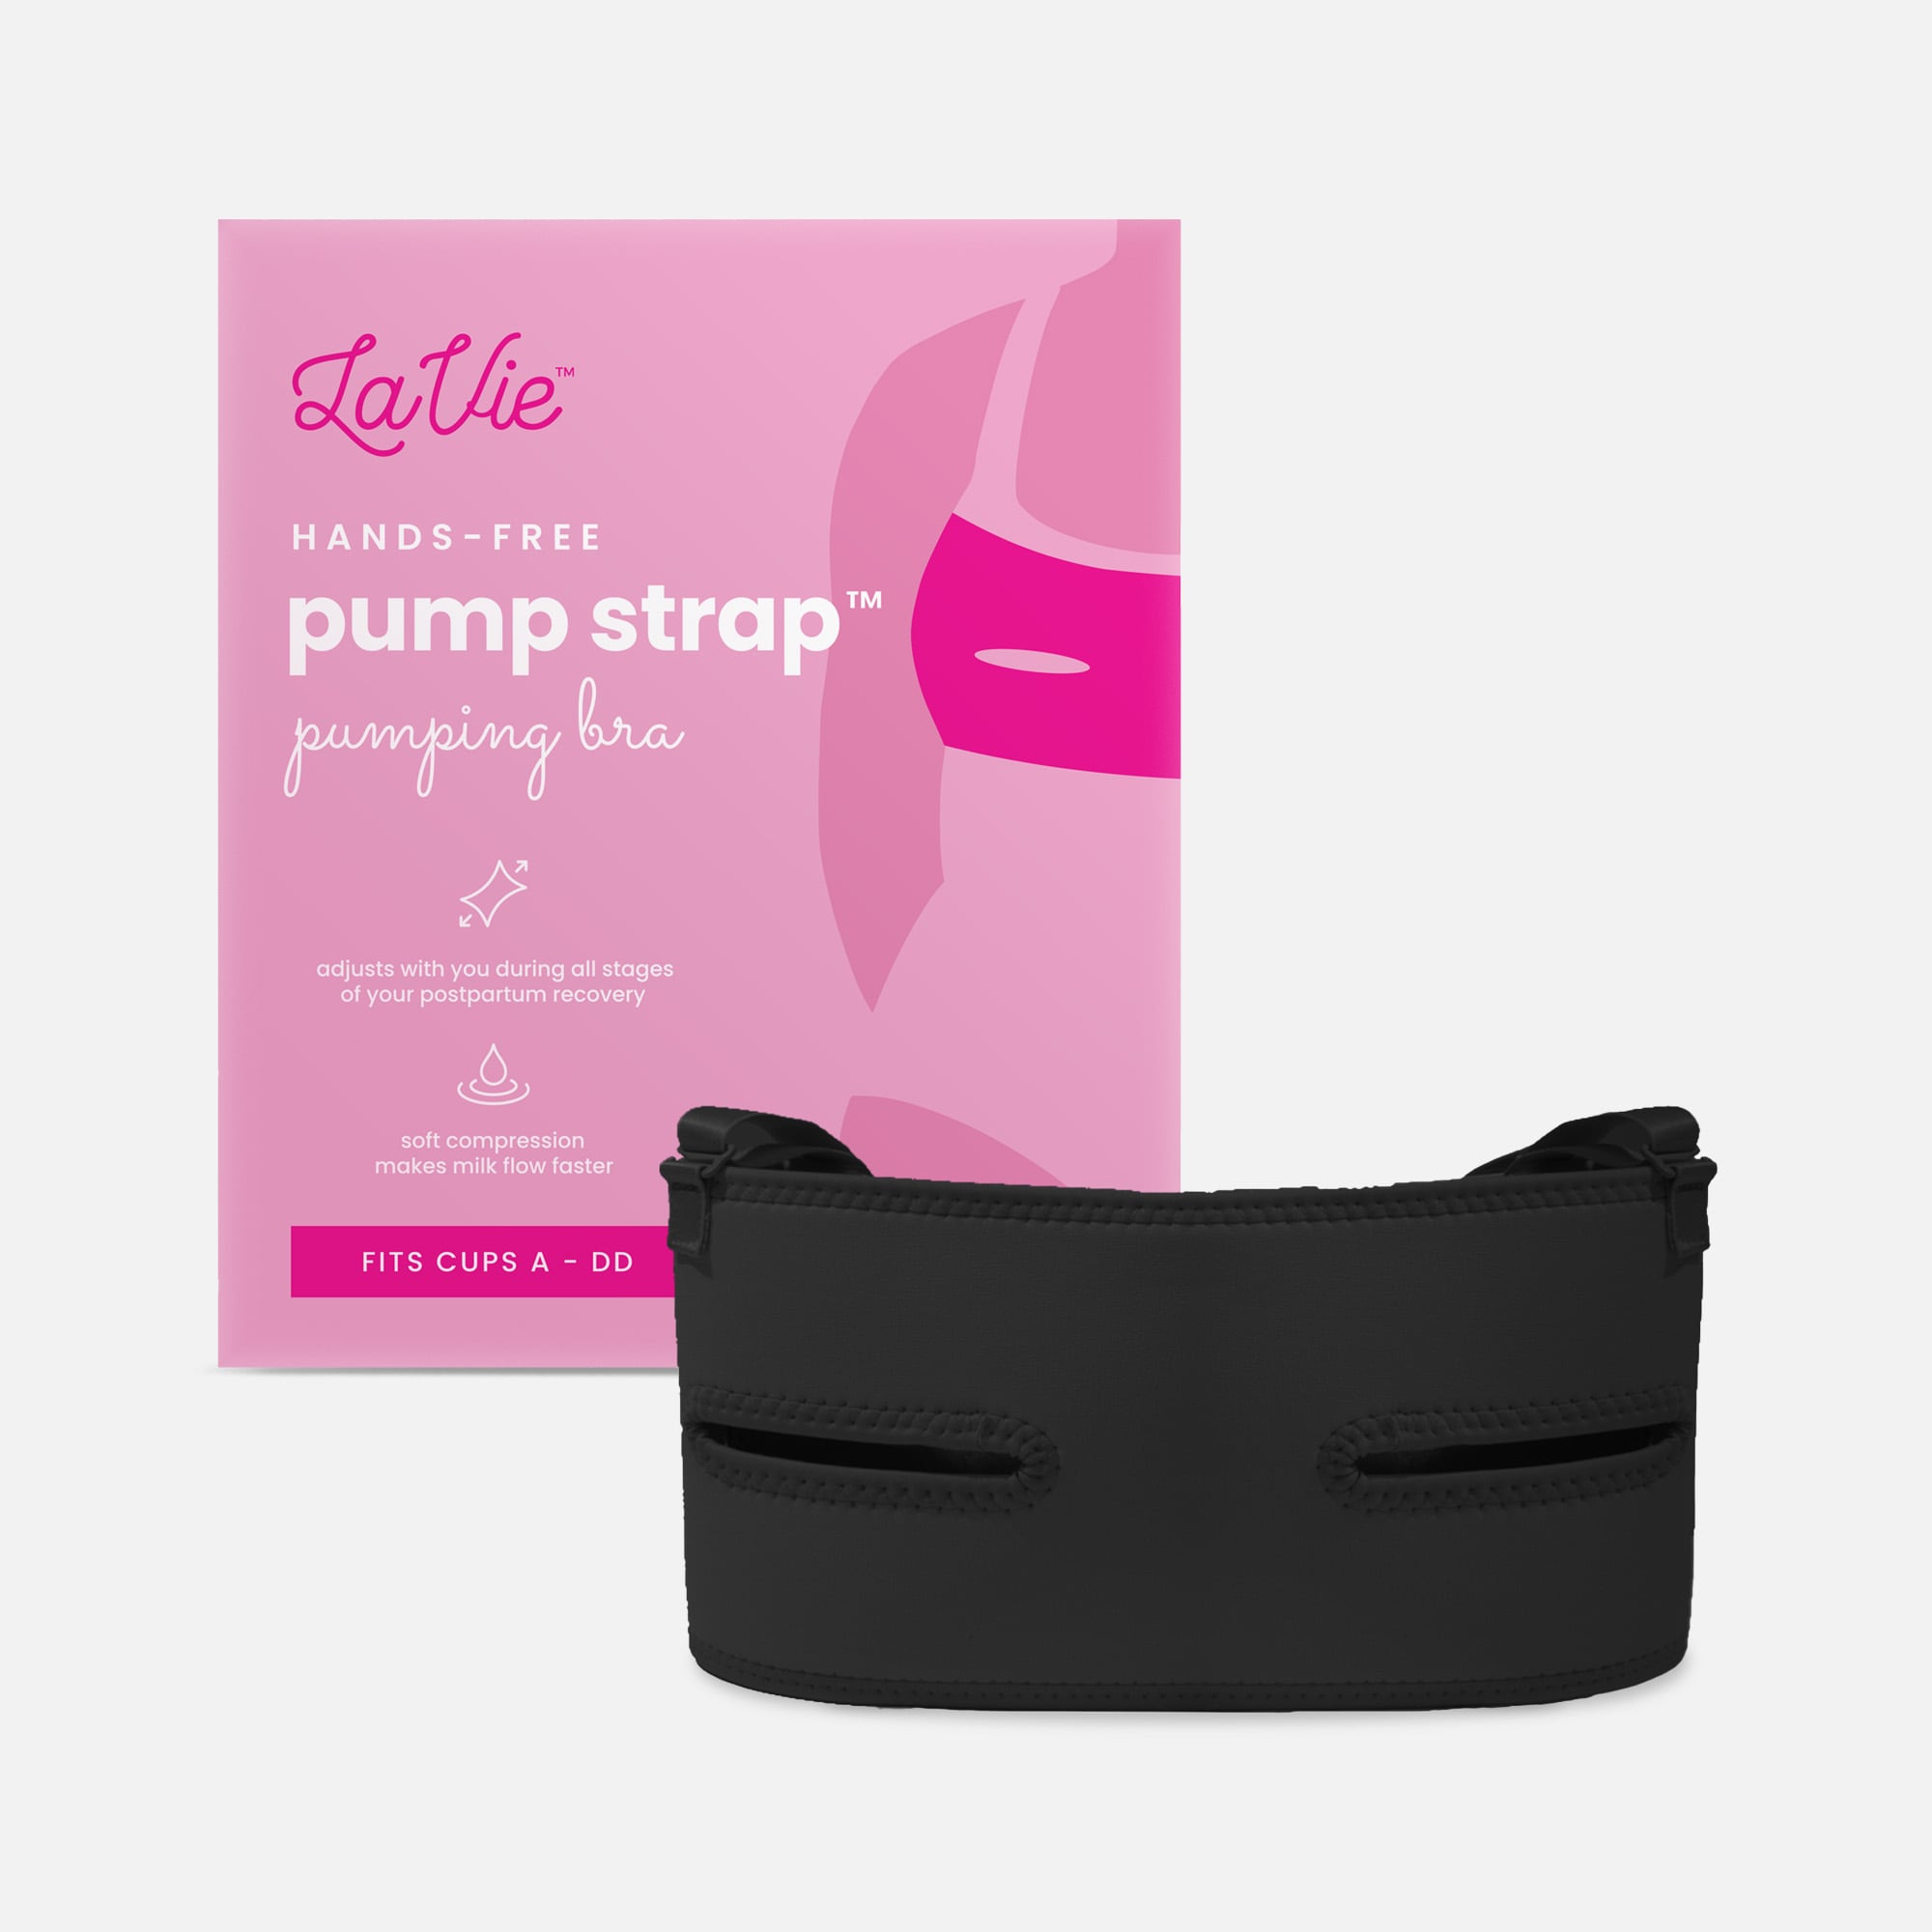 Pump Strap hands free breast pump bra